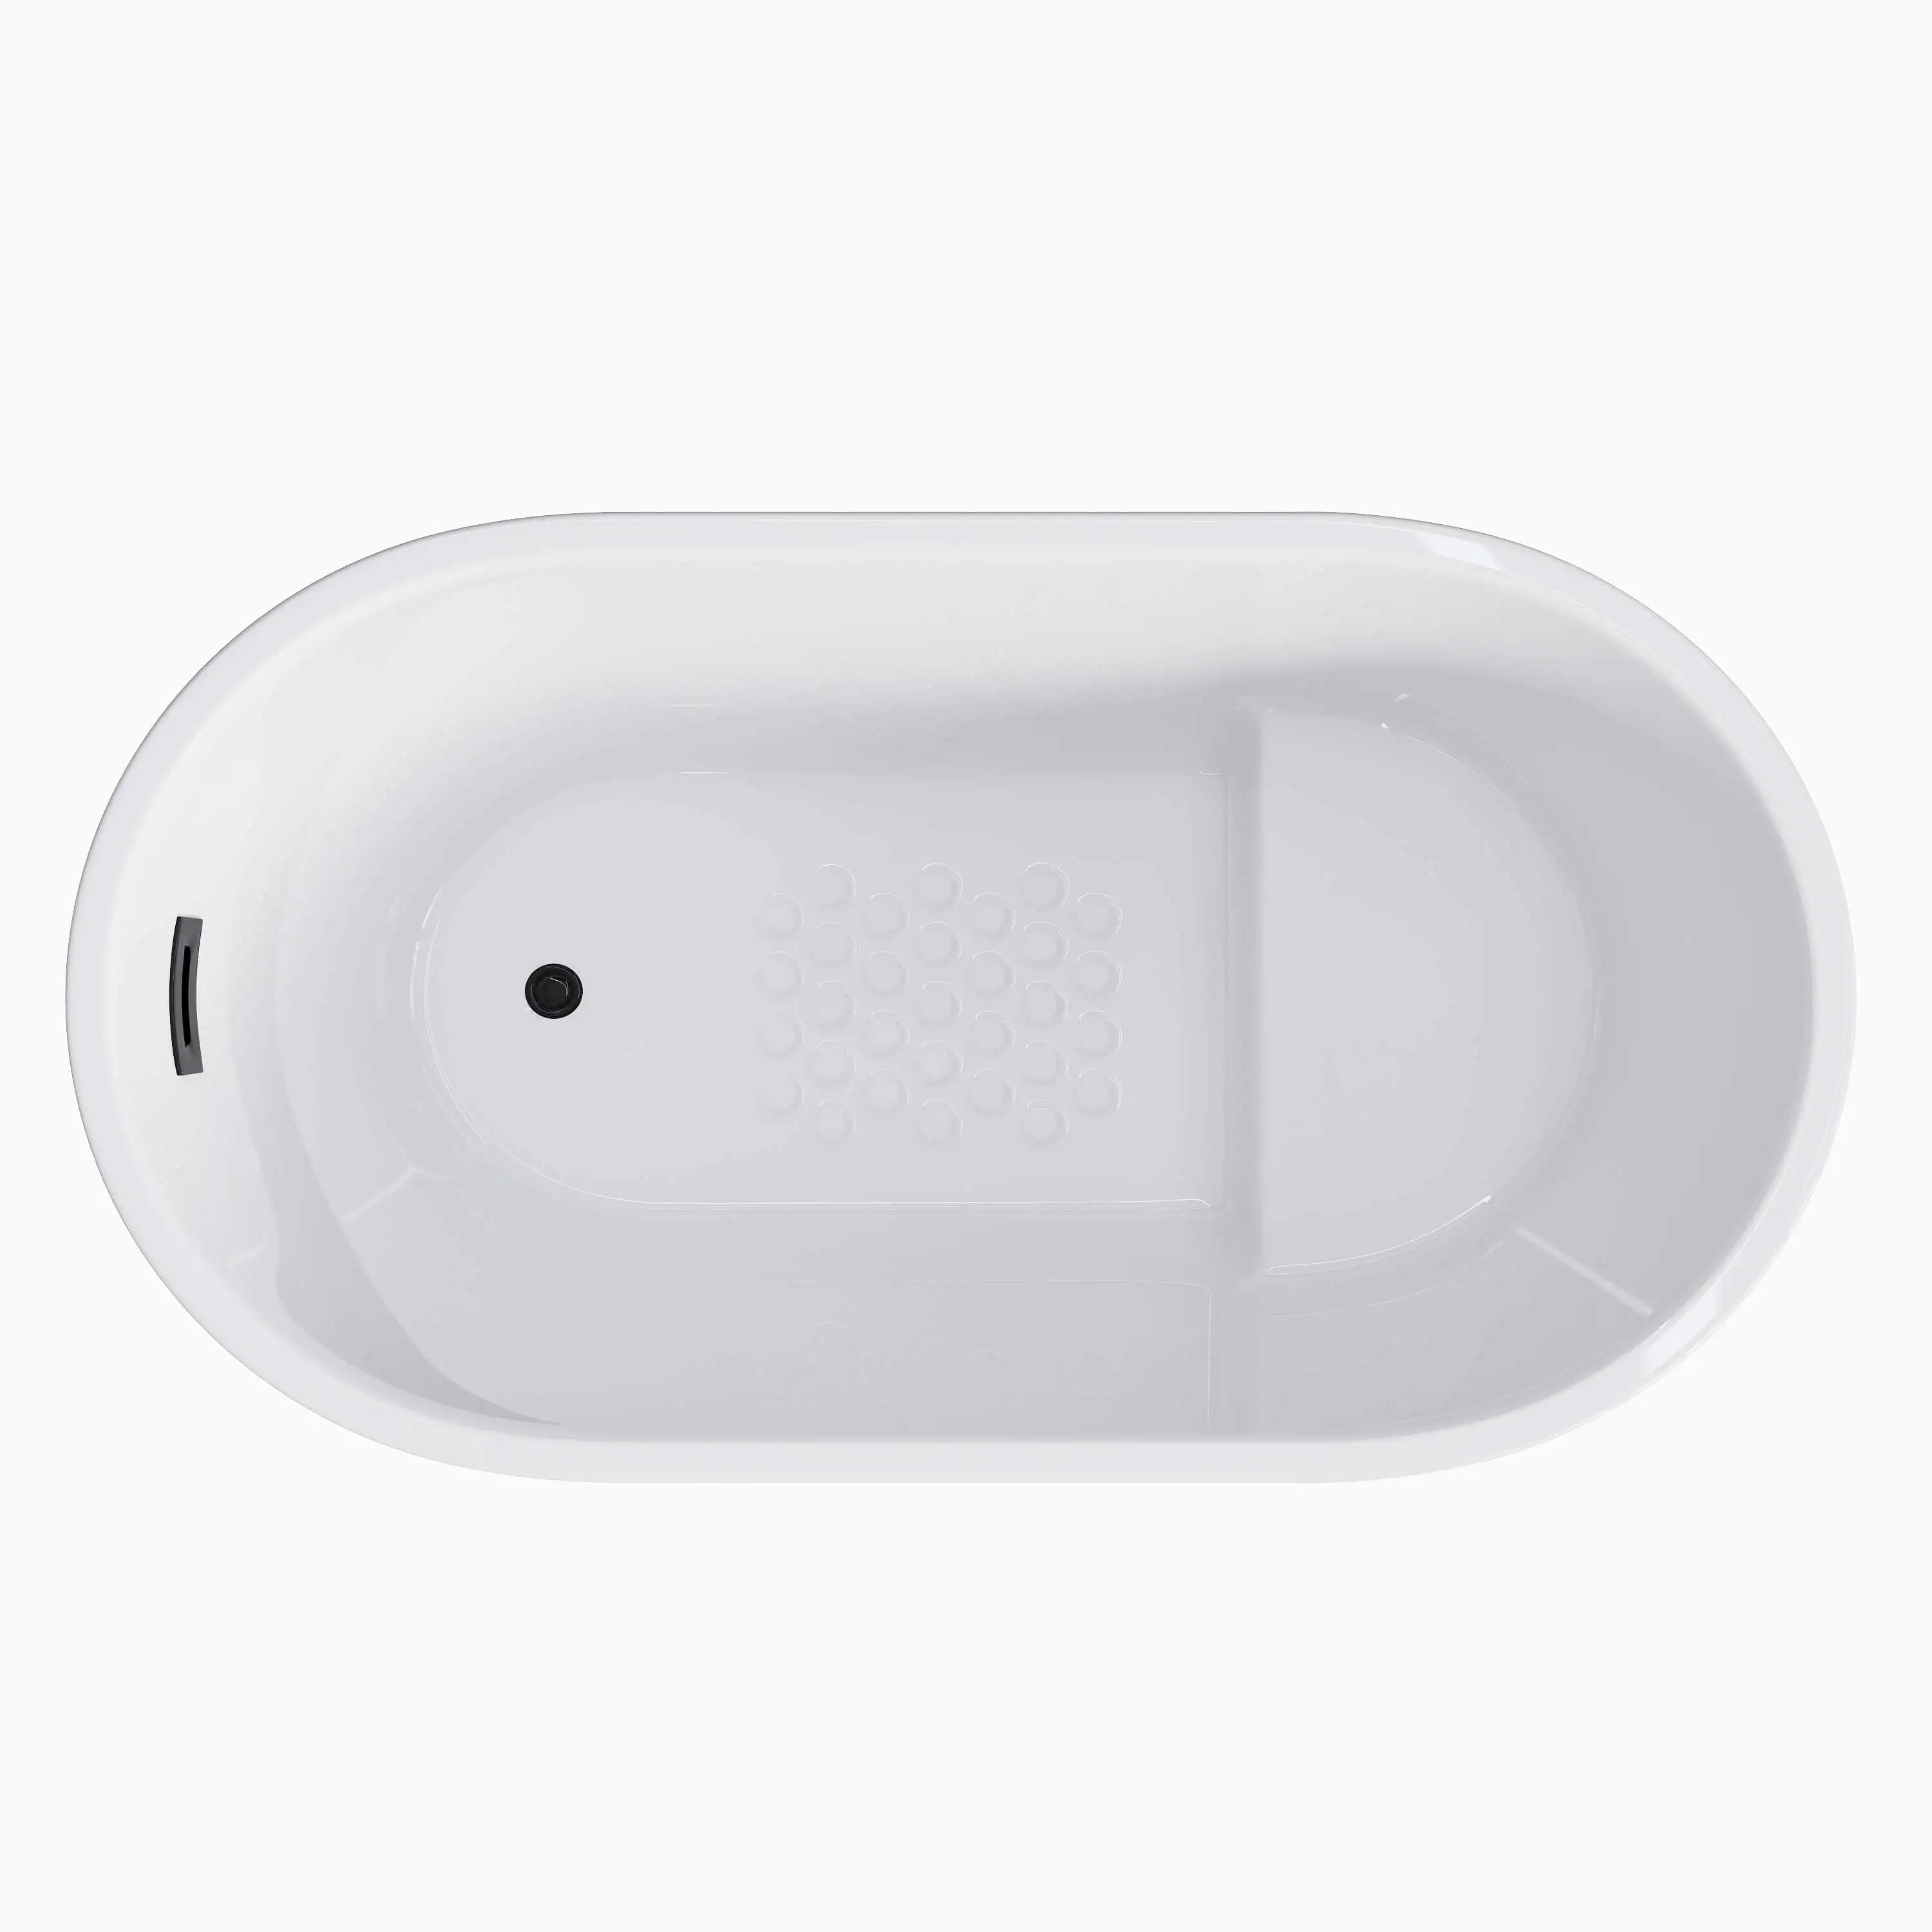 HOROW 47 Inch Best Acrylic Bathtub Soaking Tubs for Small Bathrooms Model TU47-MB